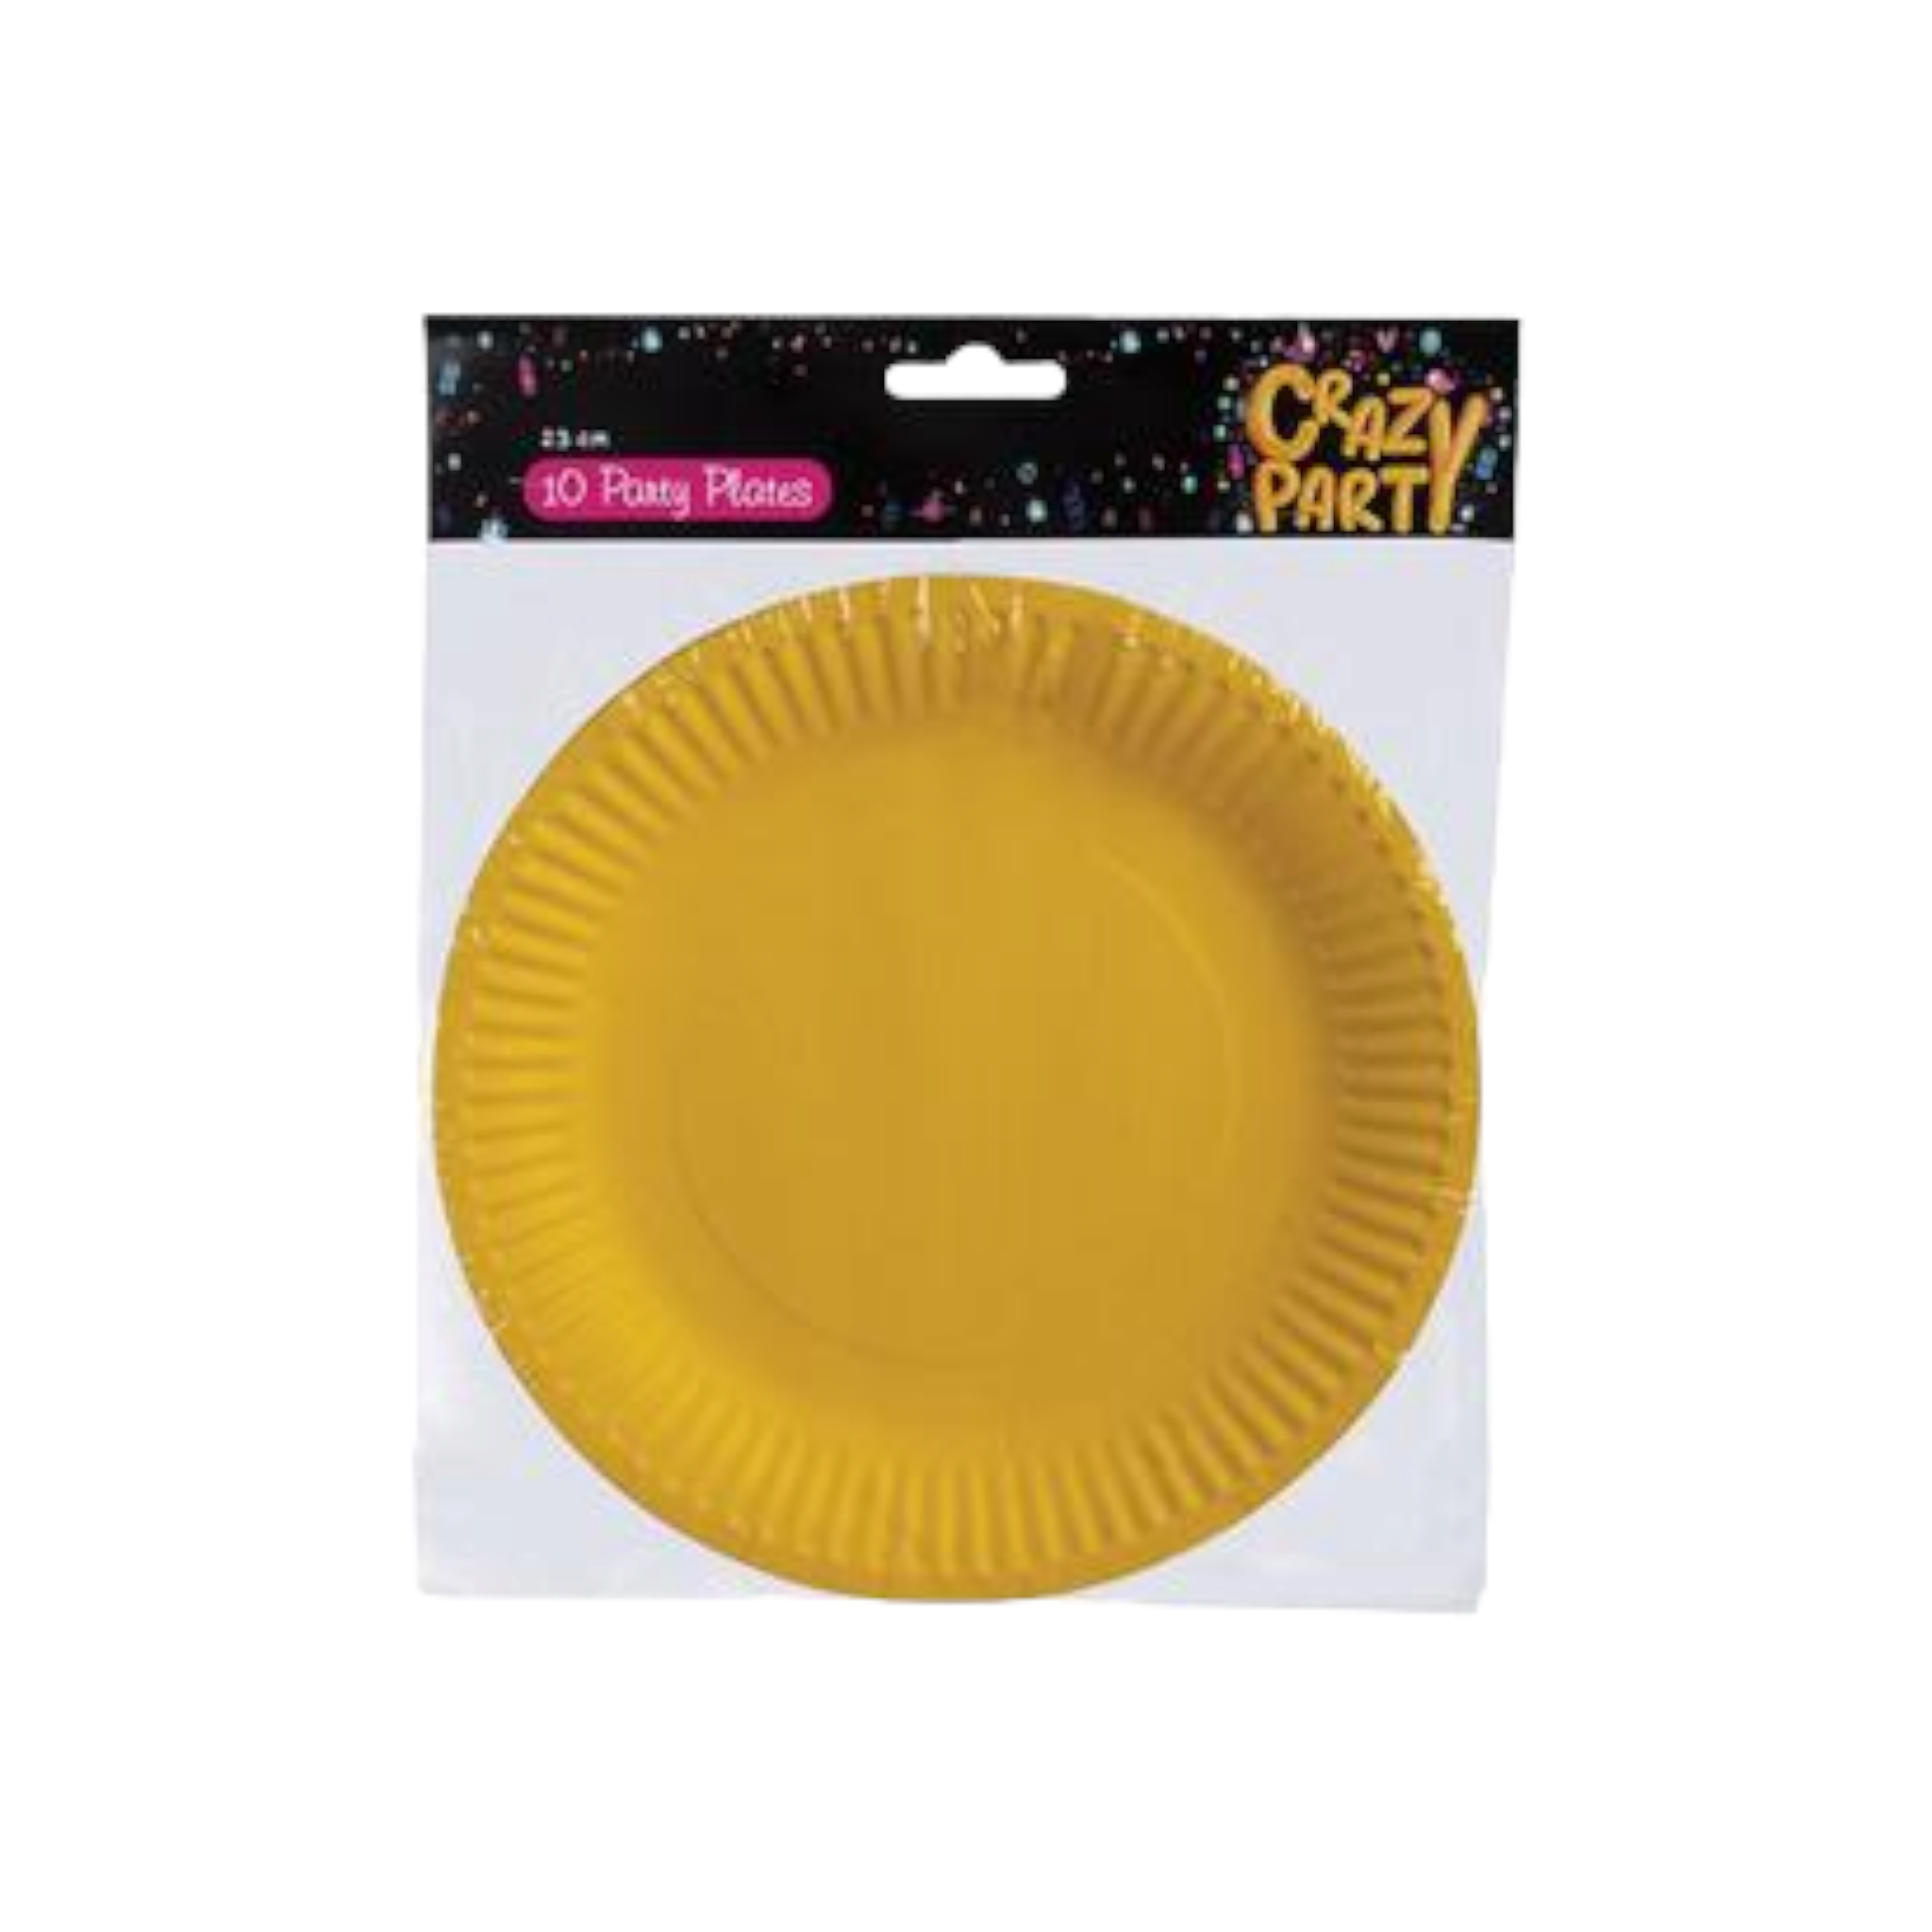 Picnic Party Plates Yellow 23cm 10pcs